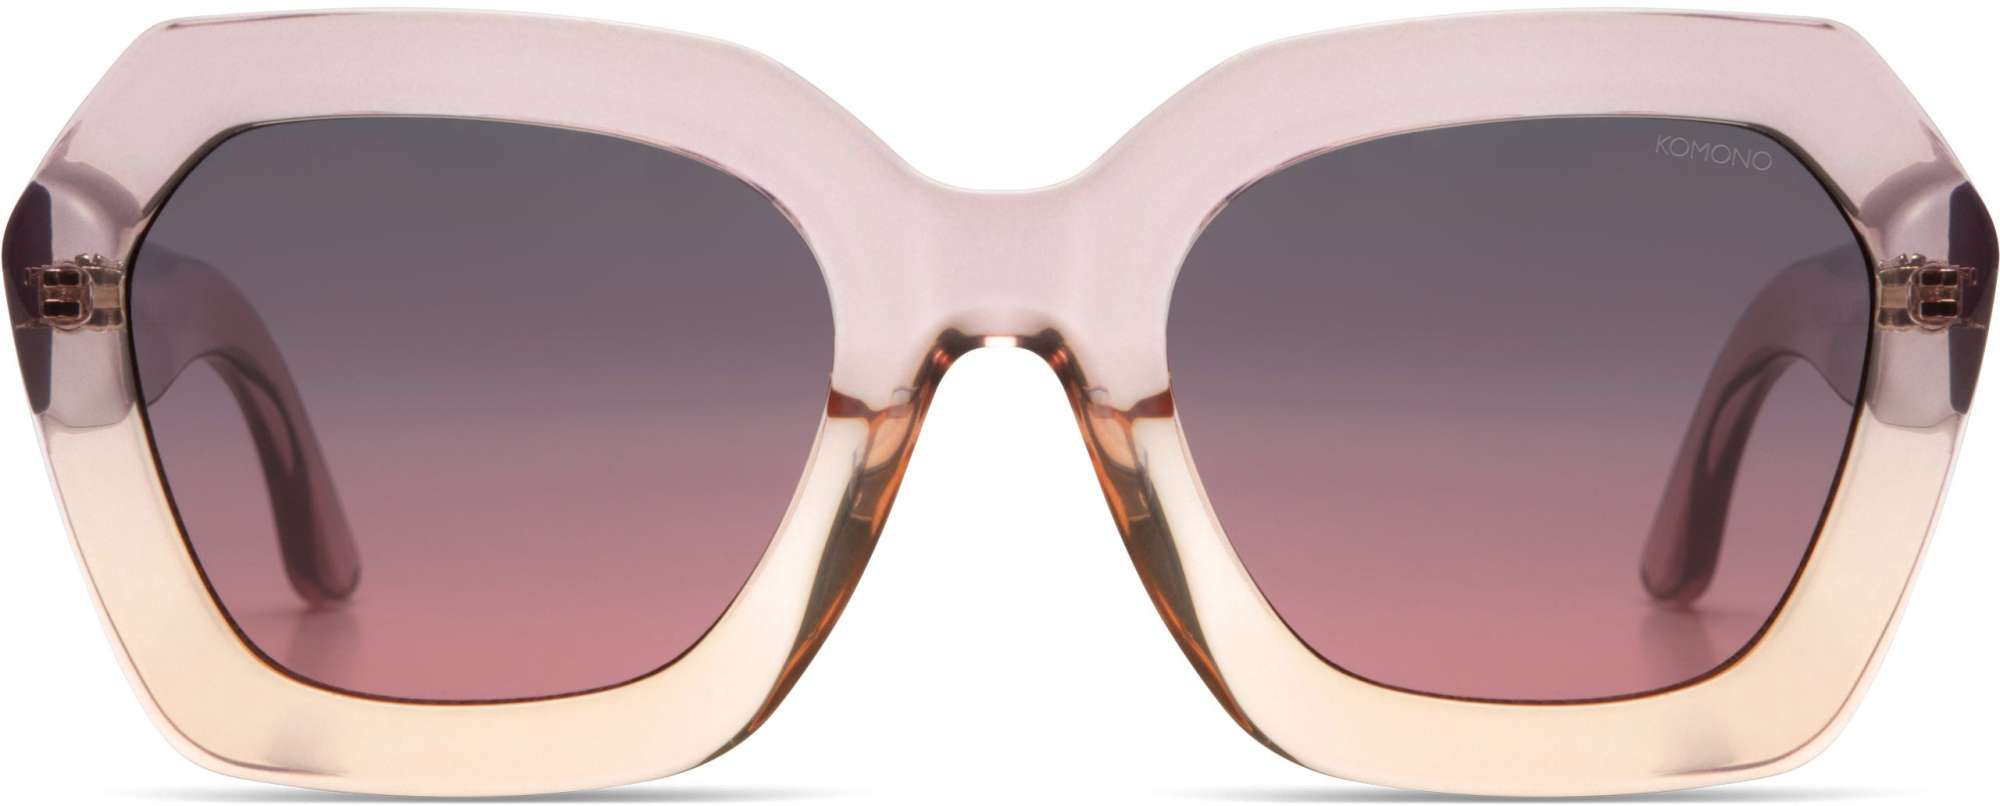 Afbeelding van Komono Gwen blush sunglasses